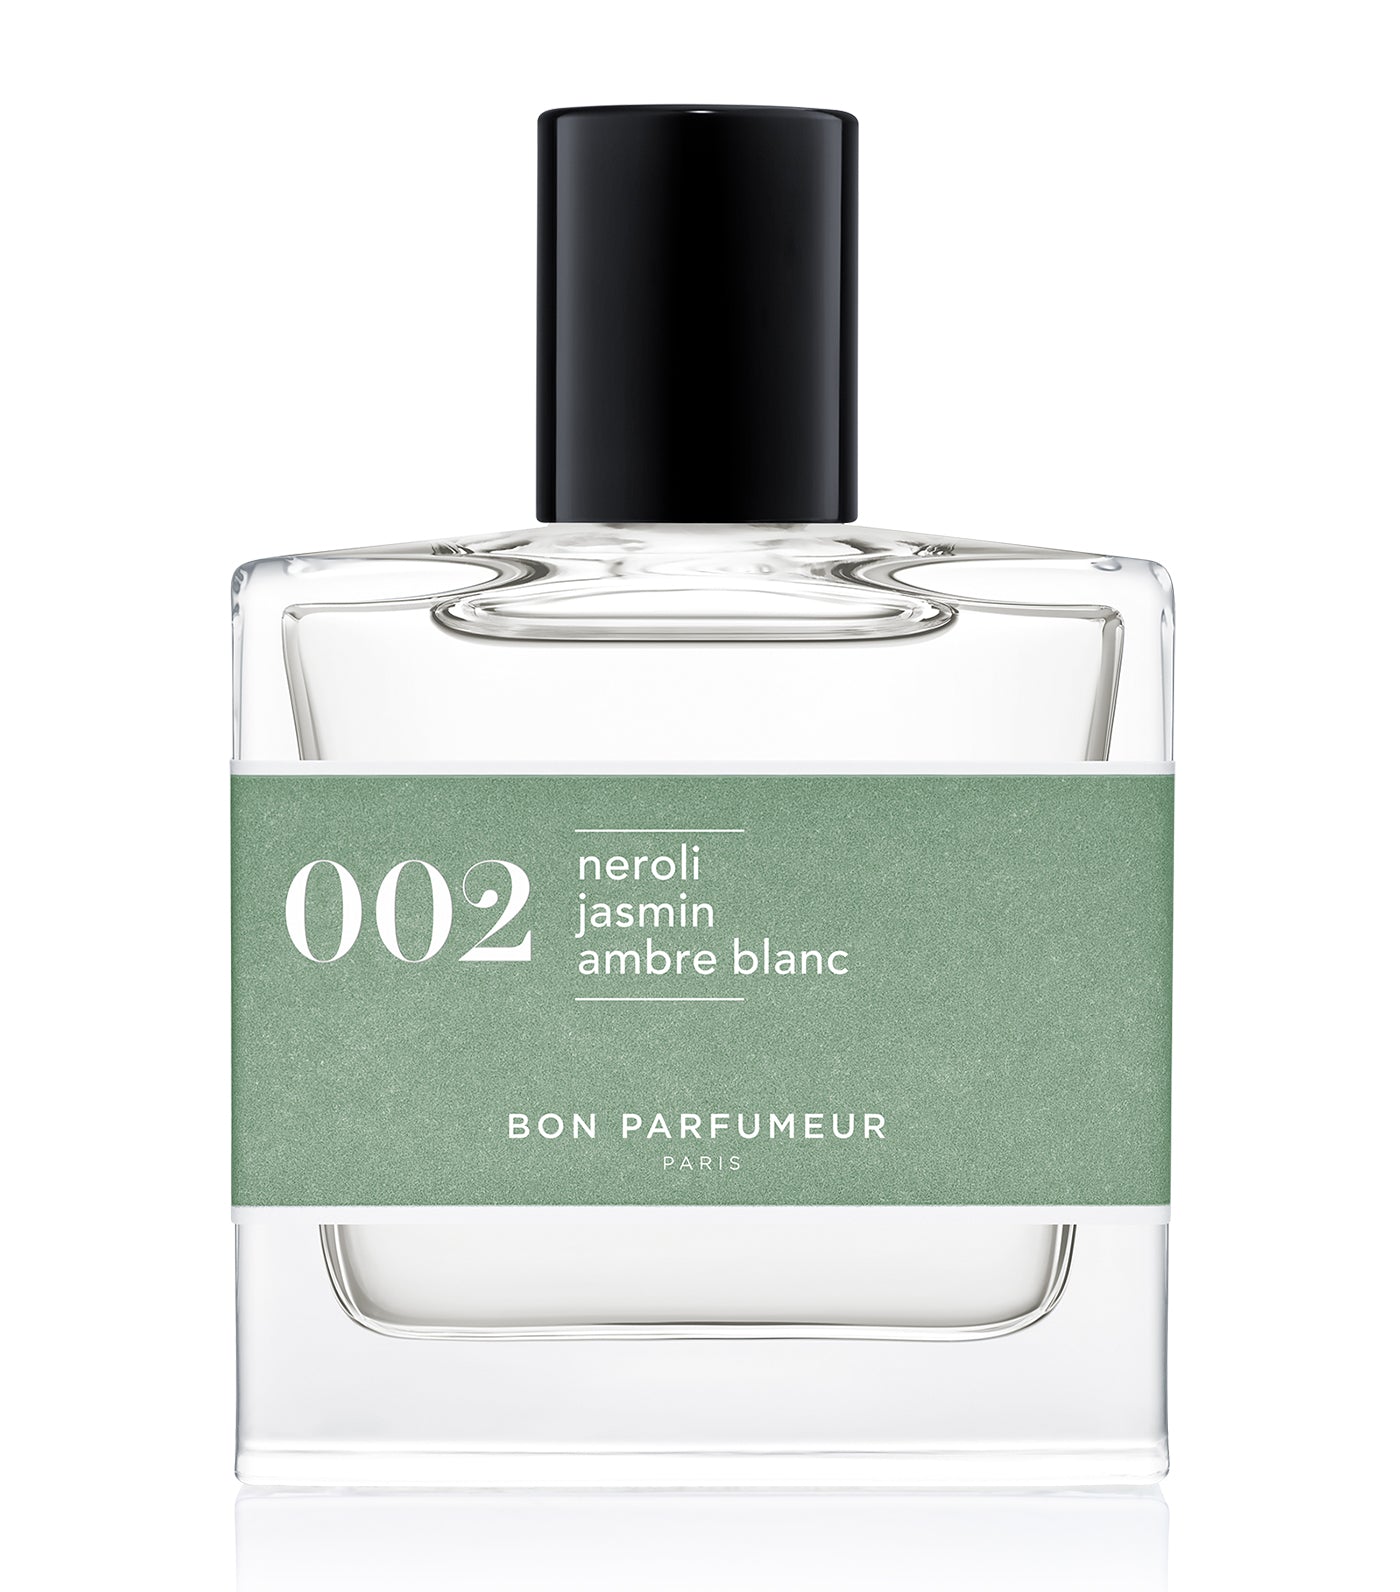 Eau de parfum 002 : neroli, jasmine and white amber